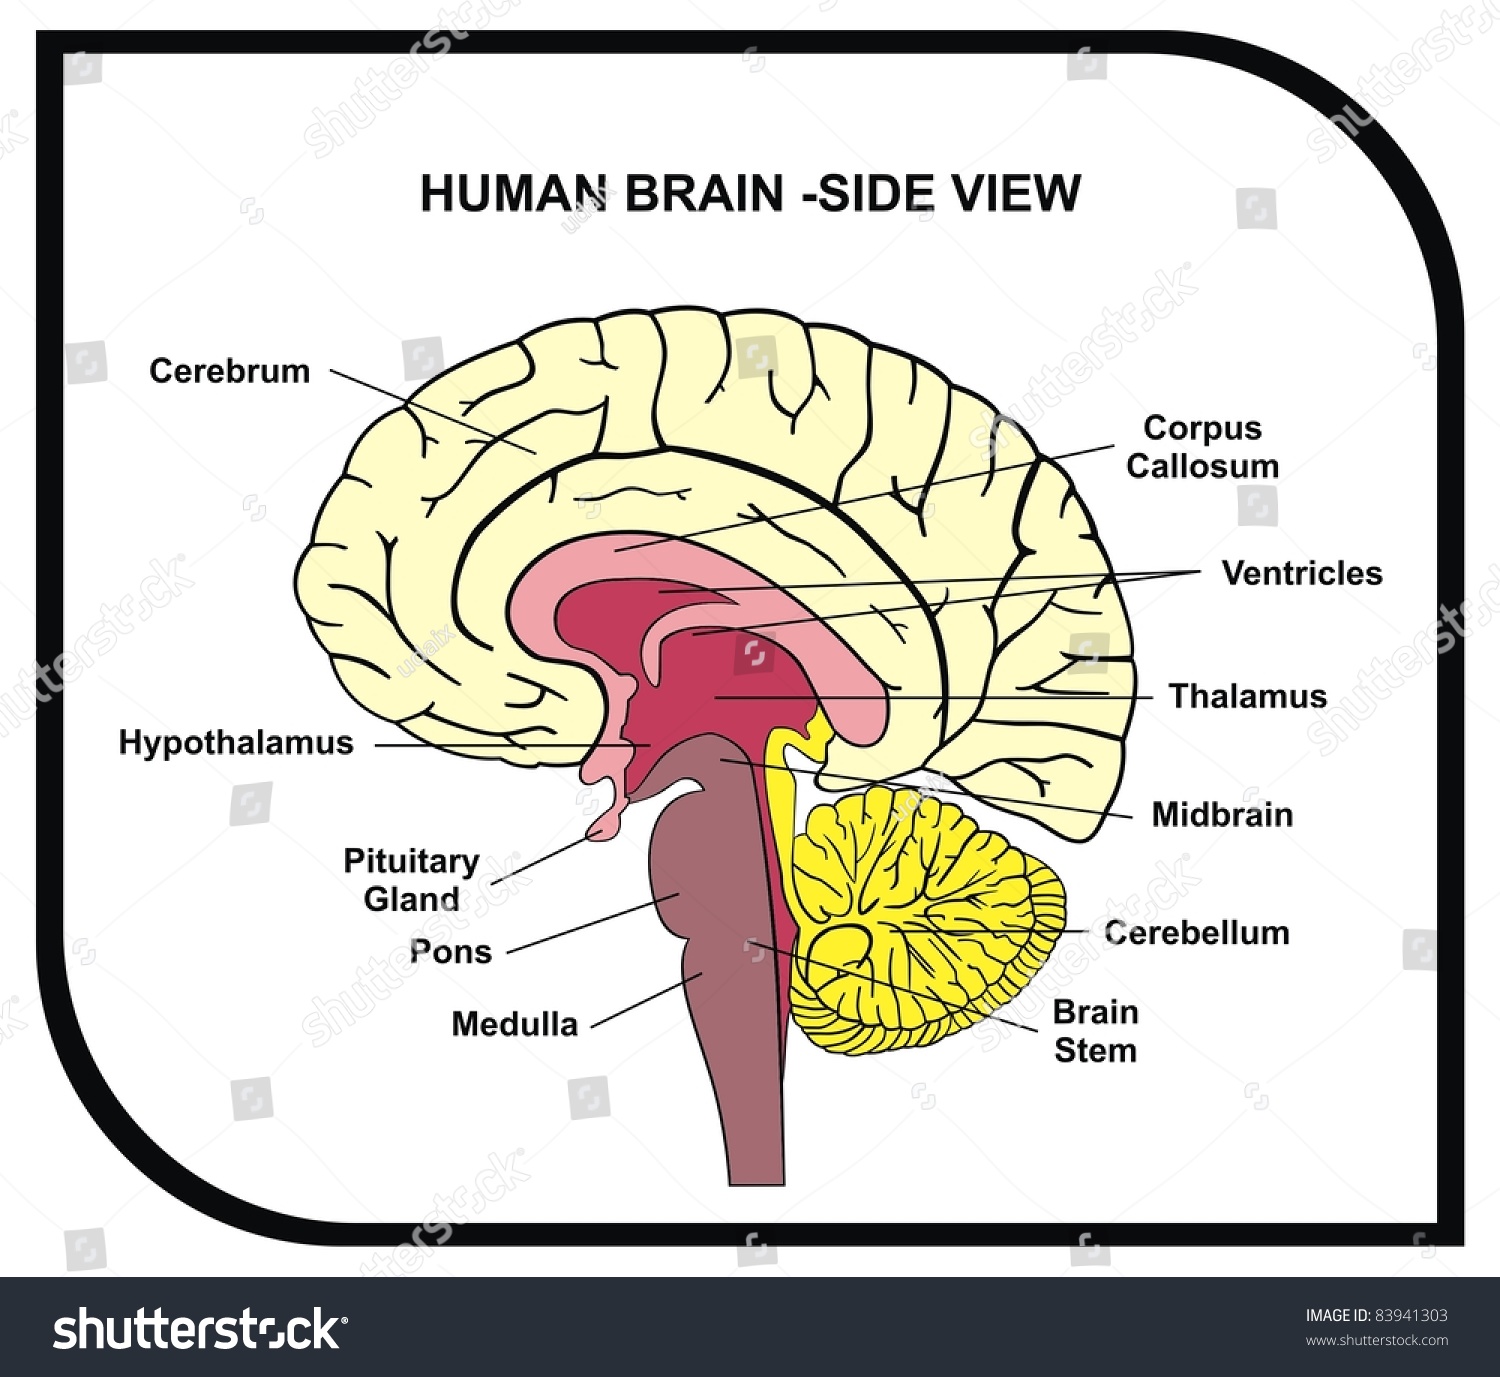 Human Brain Diagram Side View With Parts Cerebrum Hypothalamus